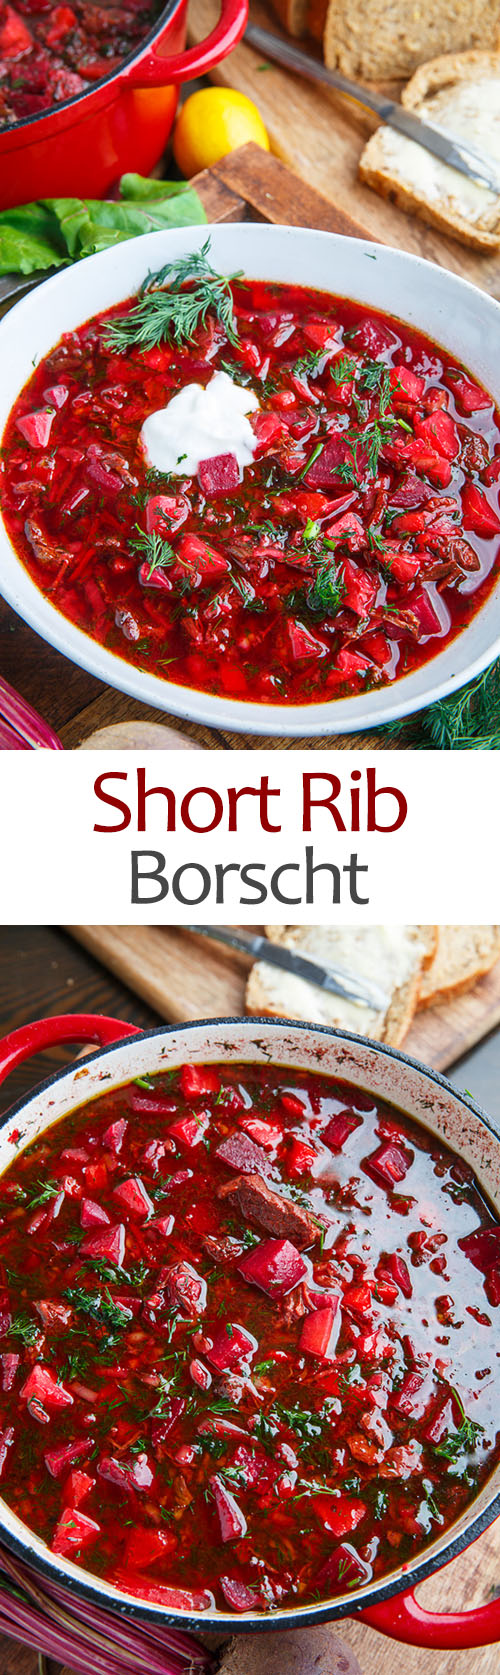 Beef Short Rib Borscht